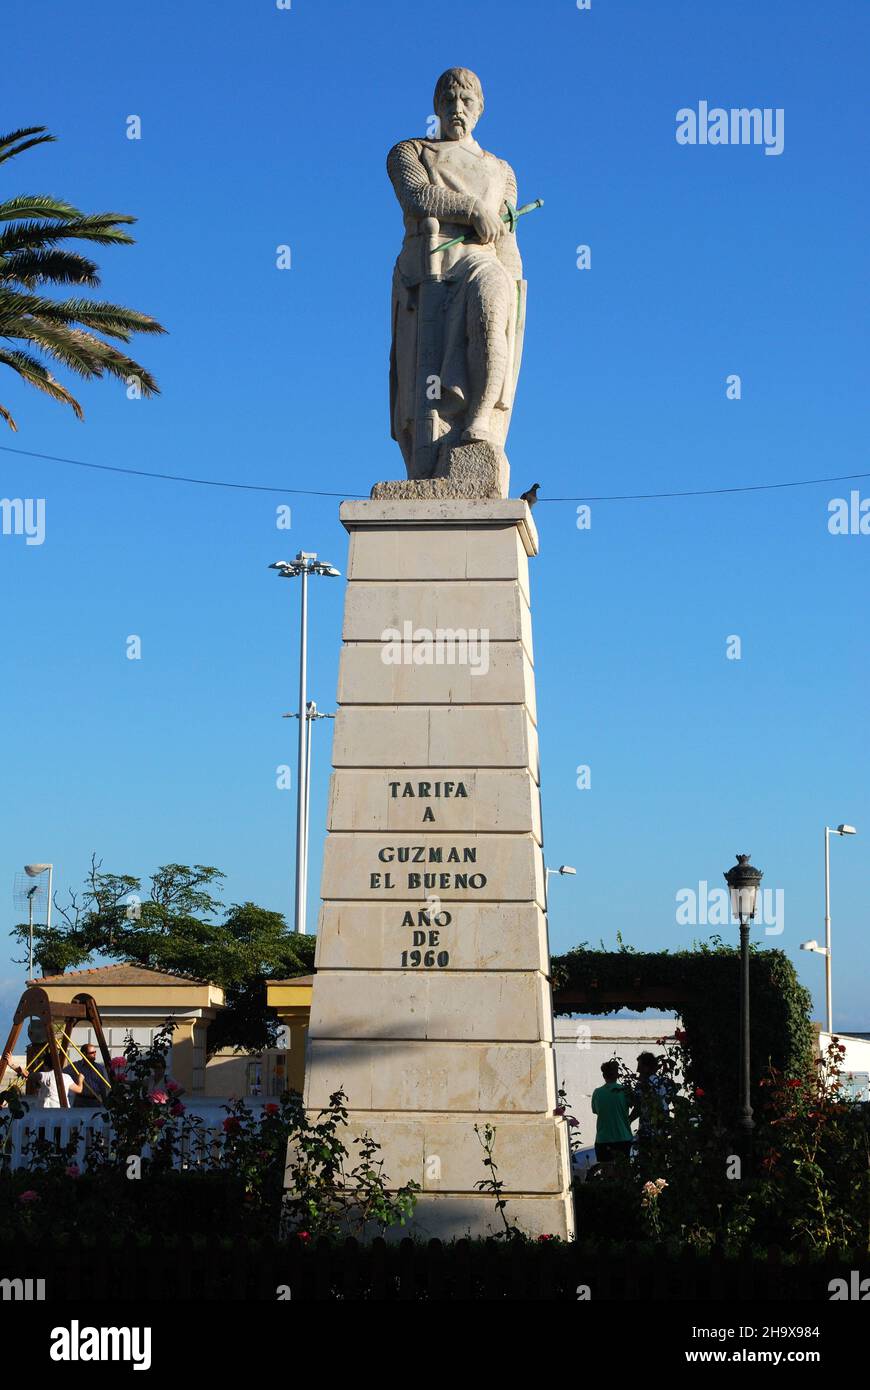 Statue of Guzman the Good (Guzman el Bueno), Tarifa, Cadiz Province, Andalusia, Spain, Europe. Stock Photo